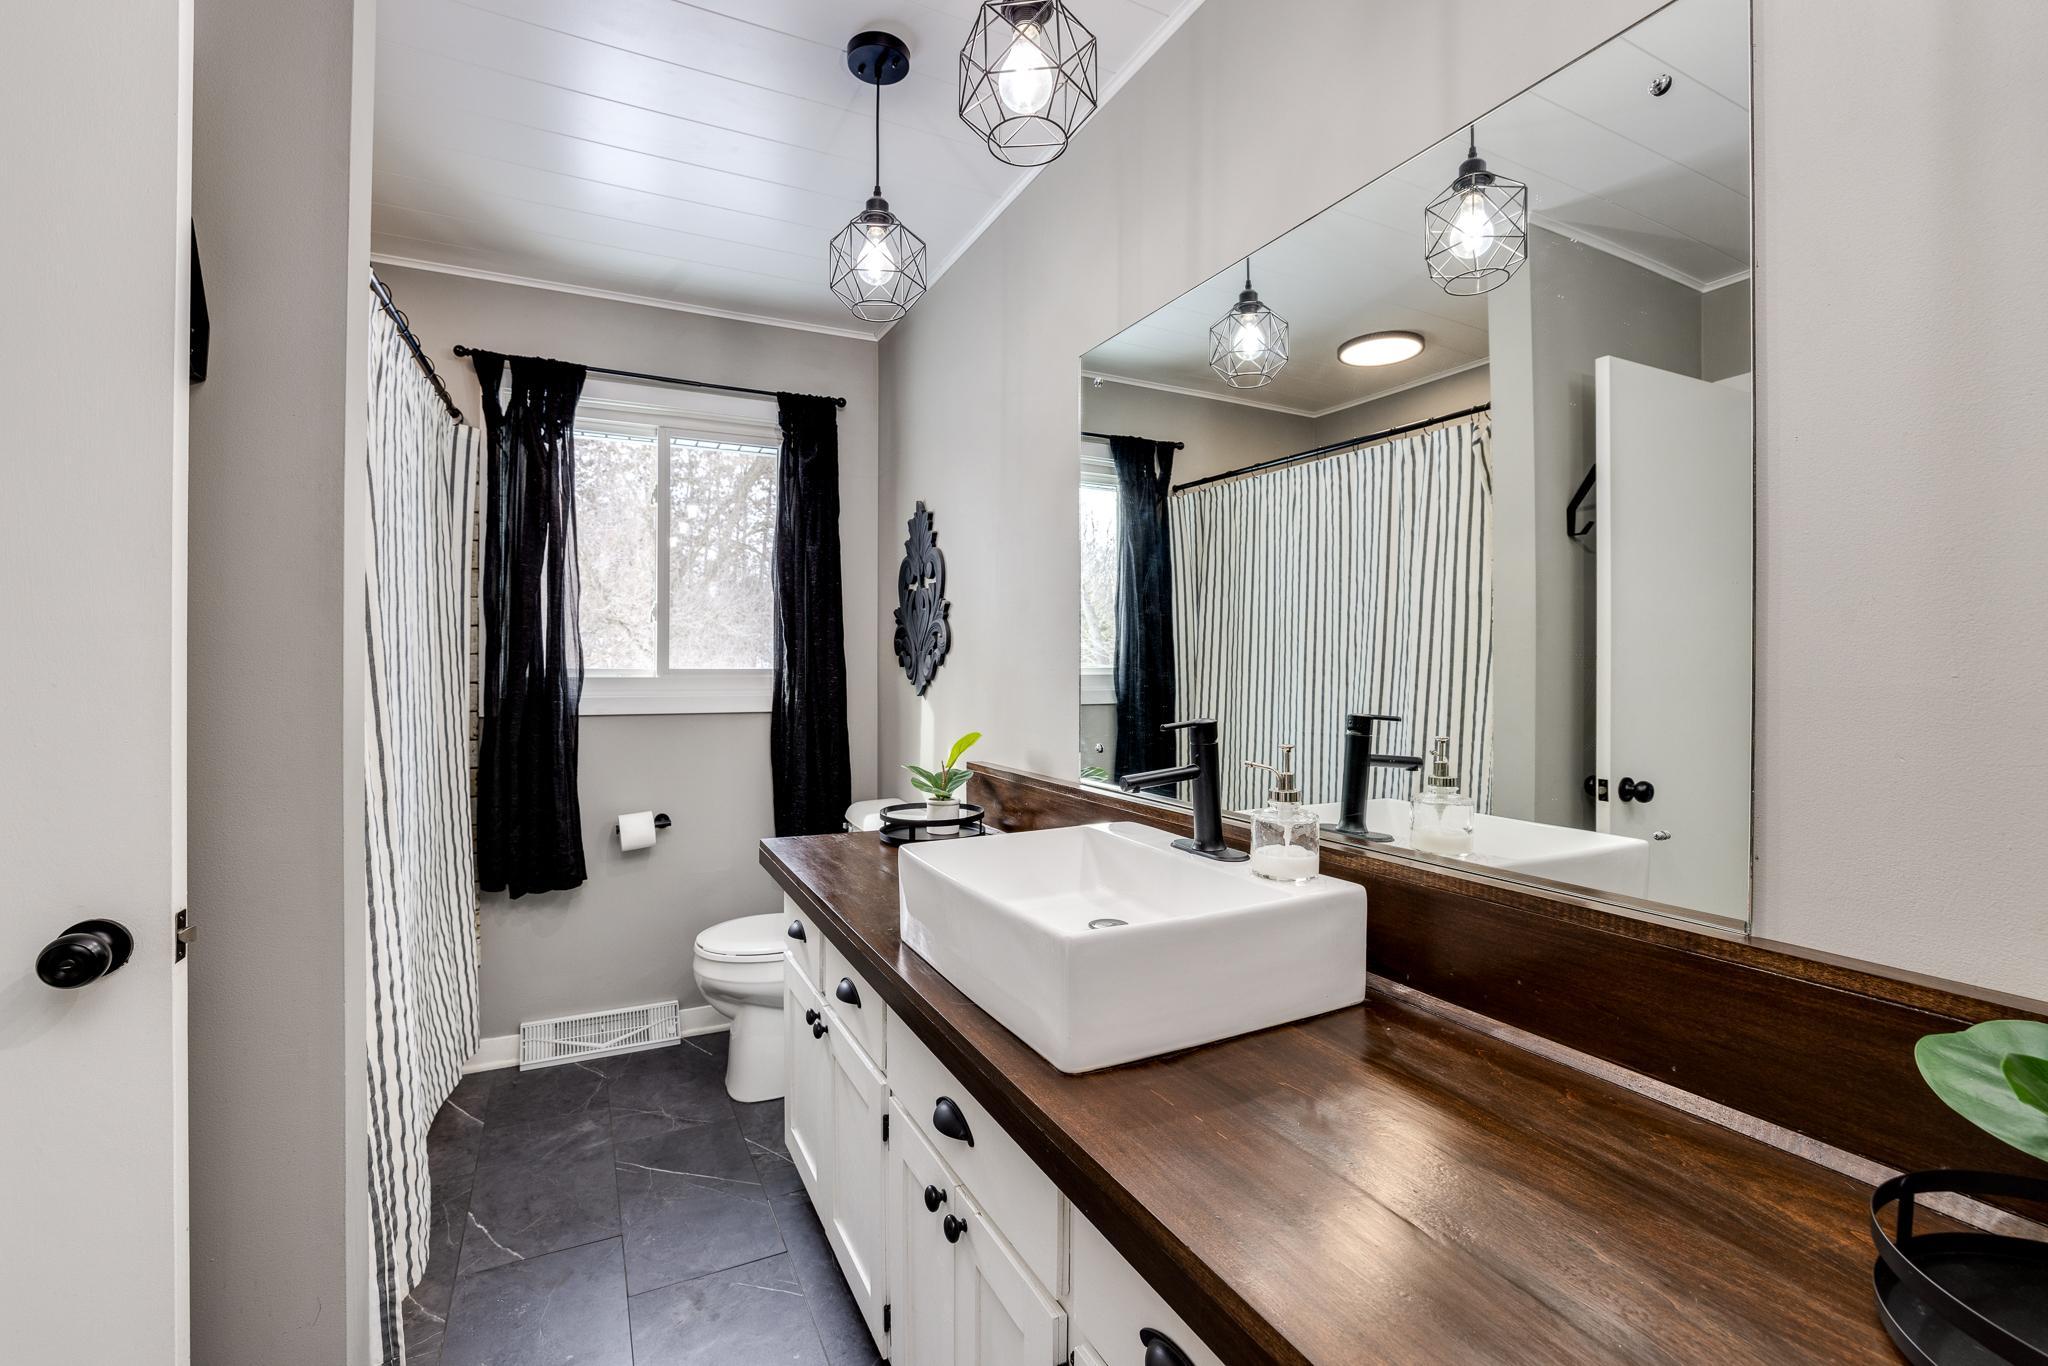 Amazing bathroom- custom countertops, paneled ceiling, designer lighting, tiled floors and more!